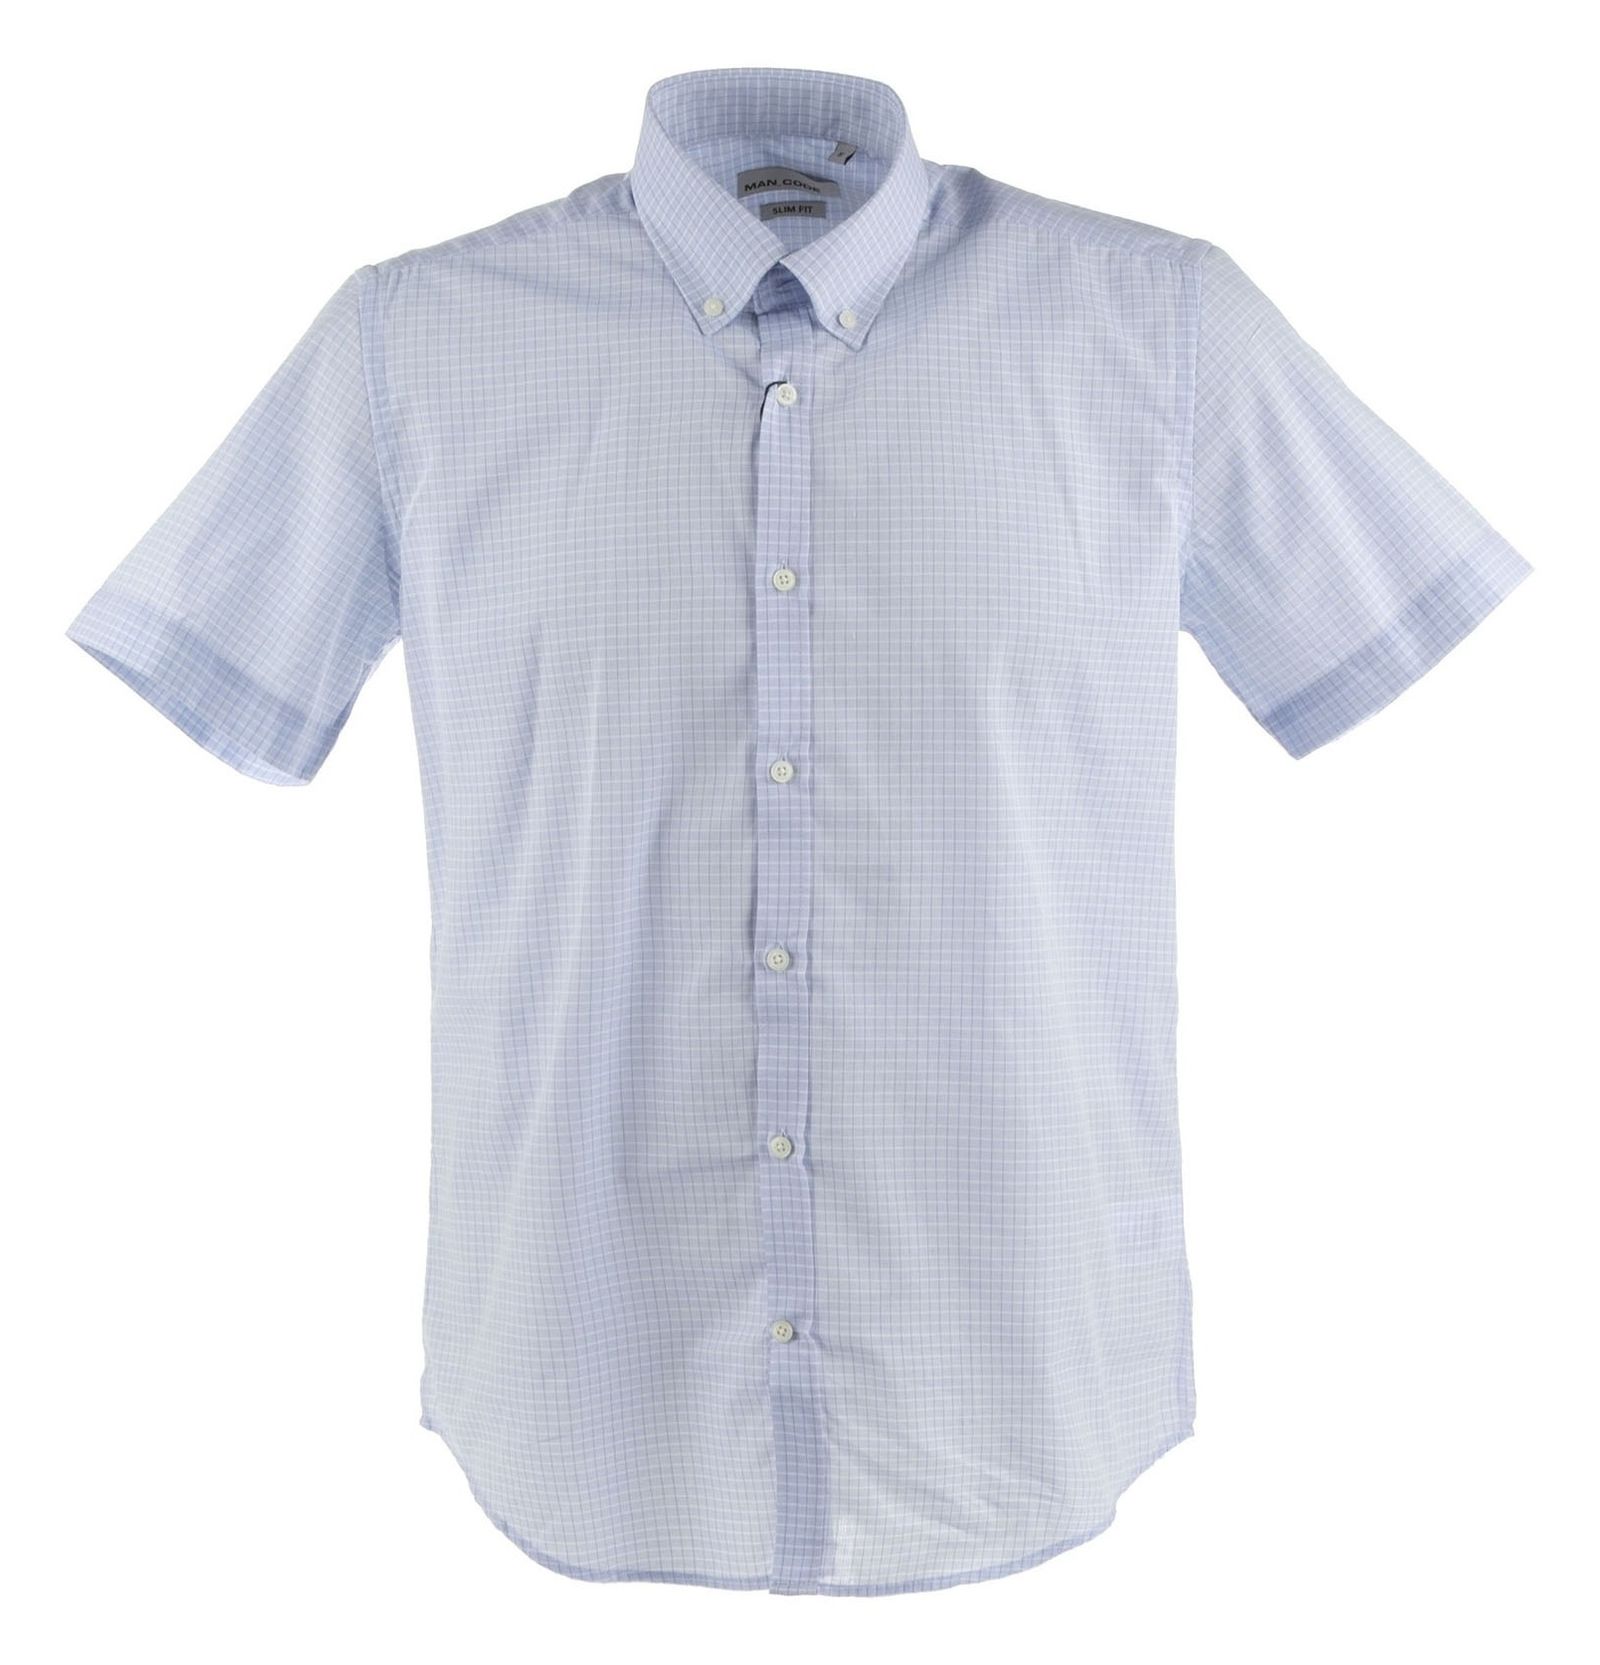 پیراهن آستین کوتاه مردانه - یوپیم - آبي  - 1